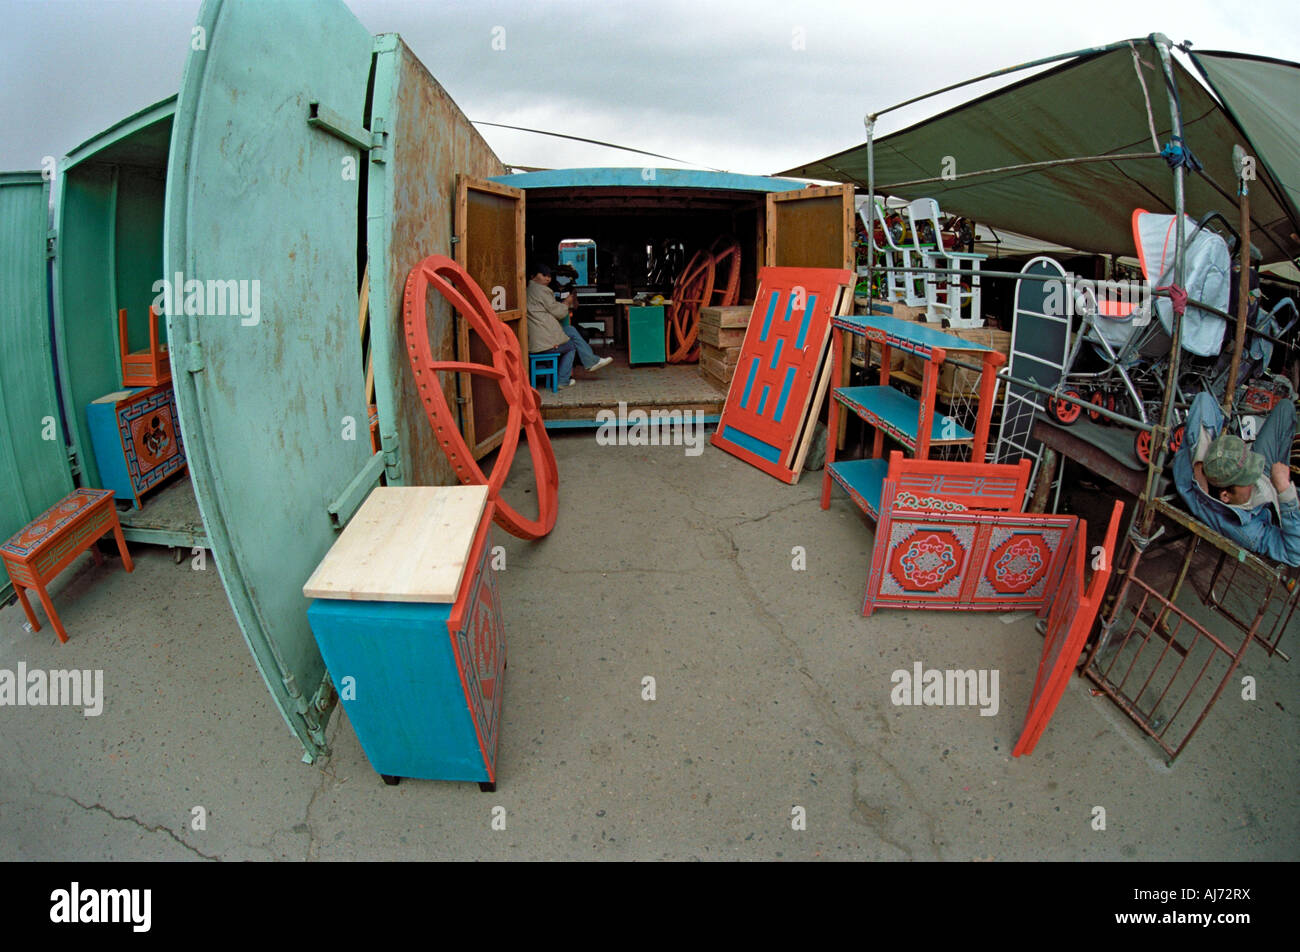 Mongolian national dwelling ger or yurt on sale. Khovd city public market. Mongolia Stock Photo